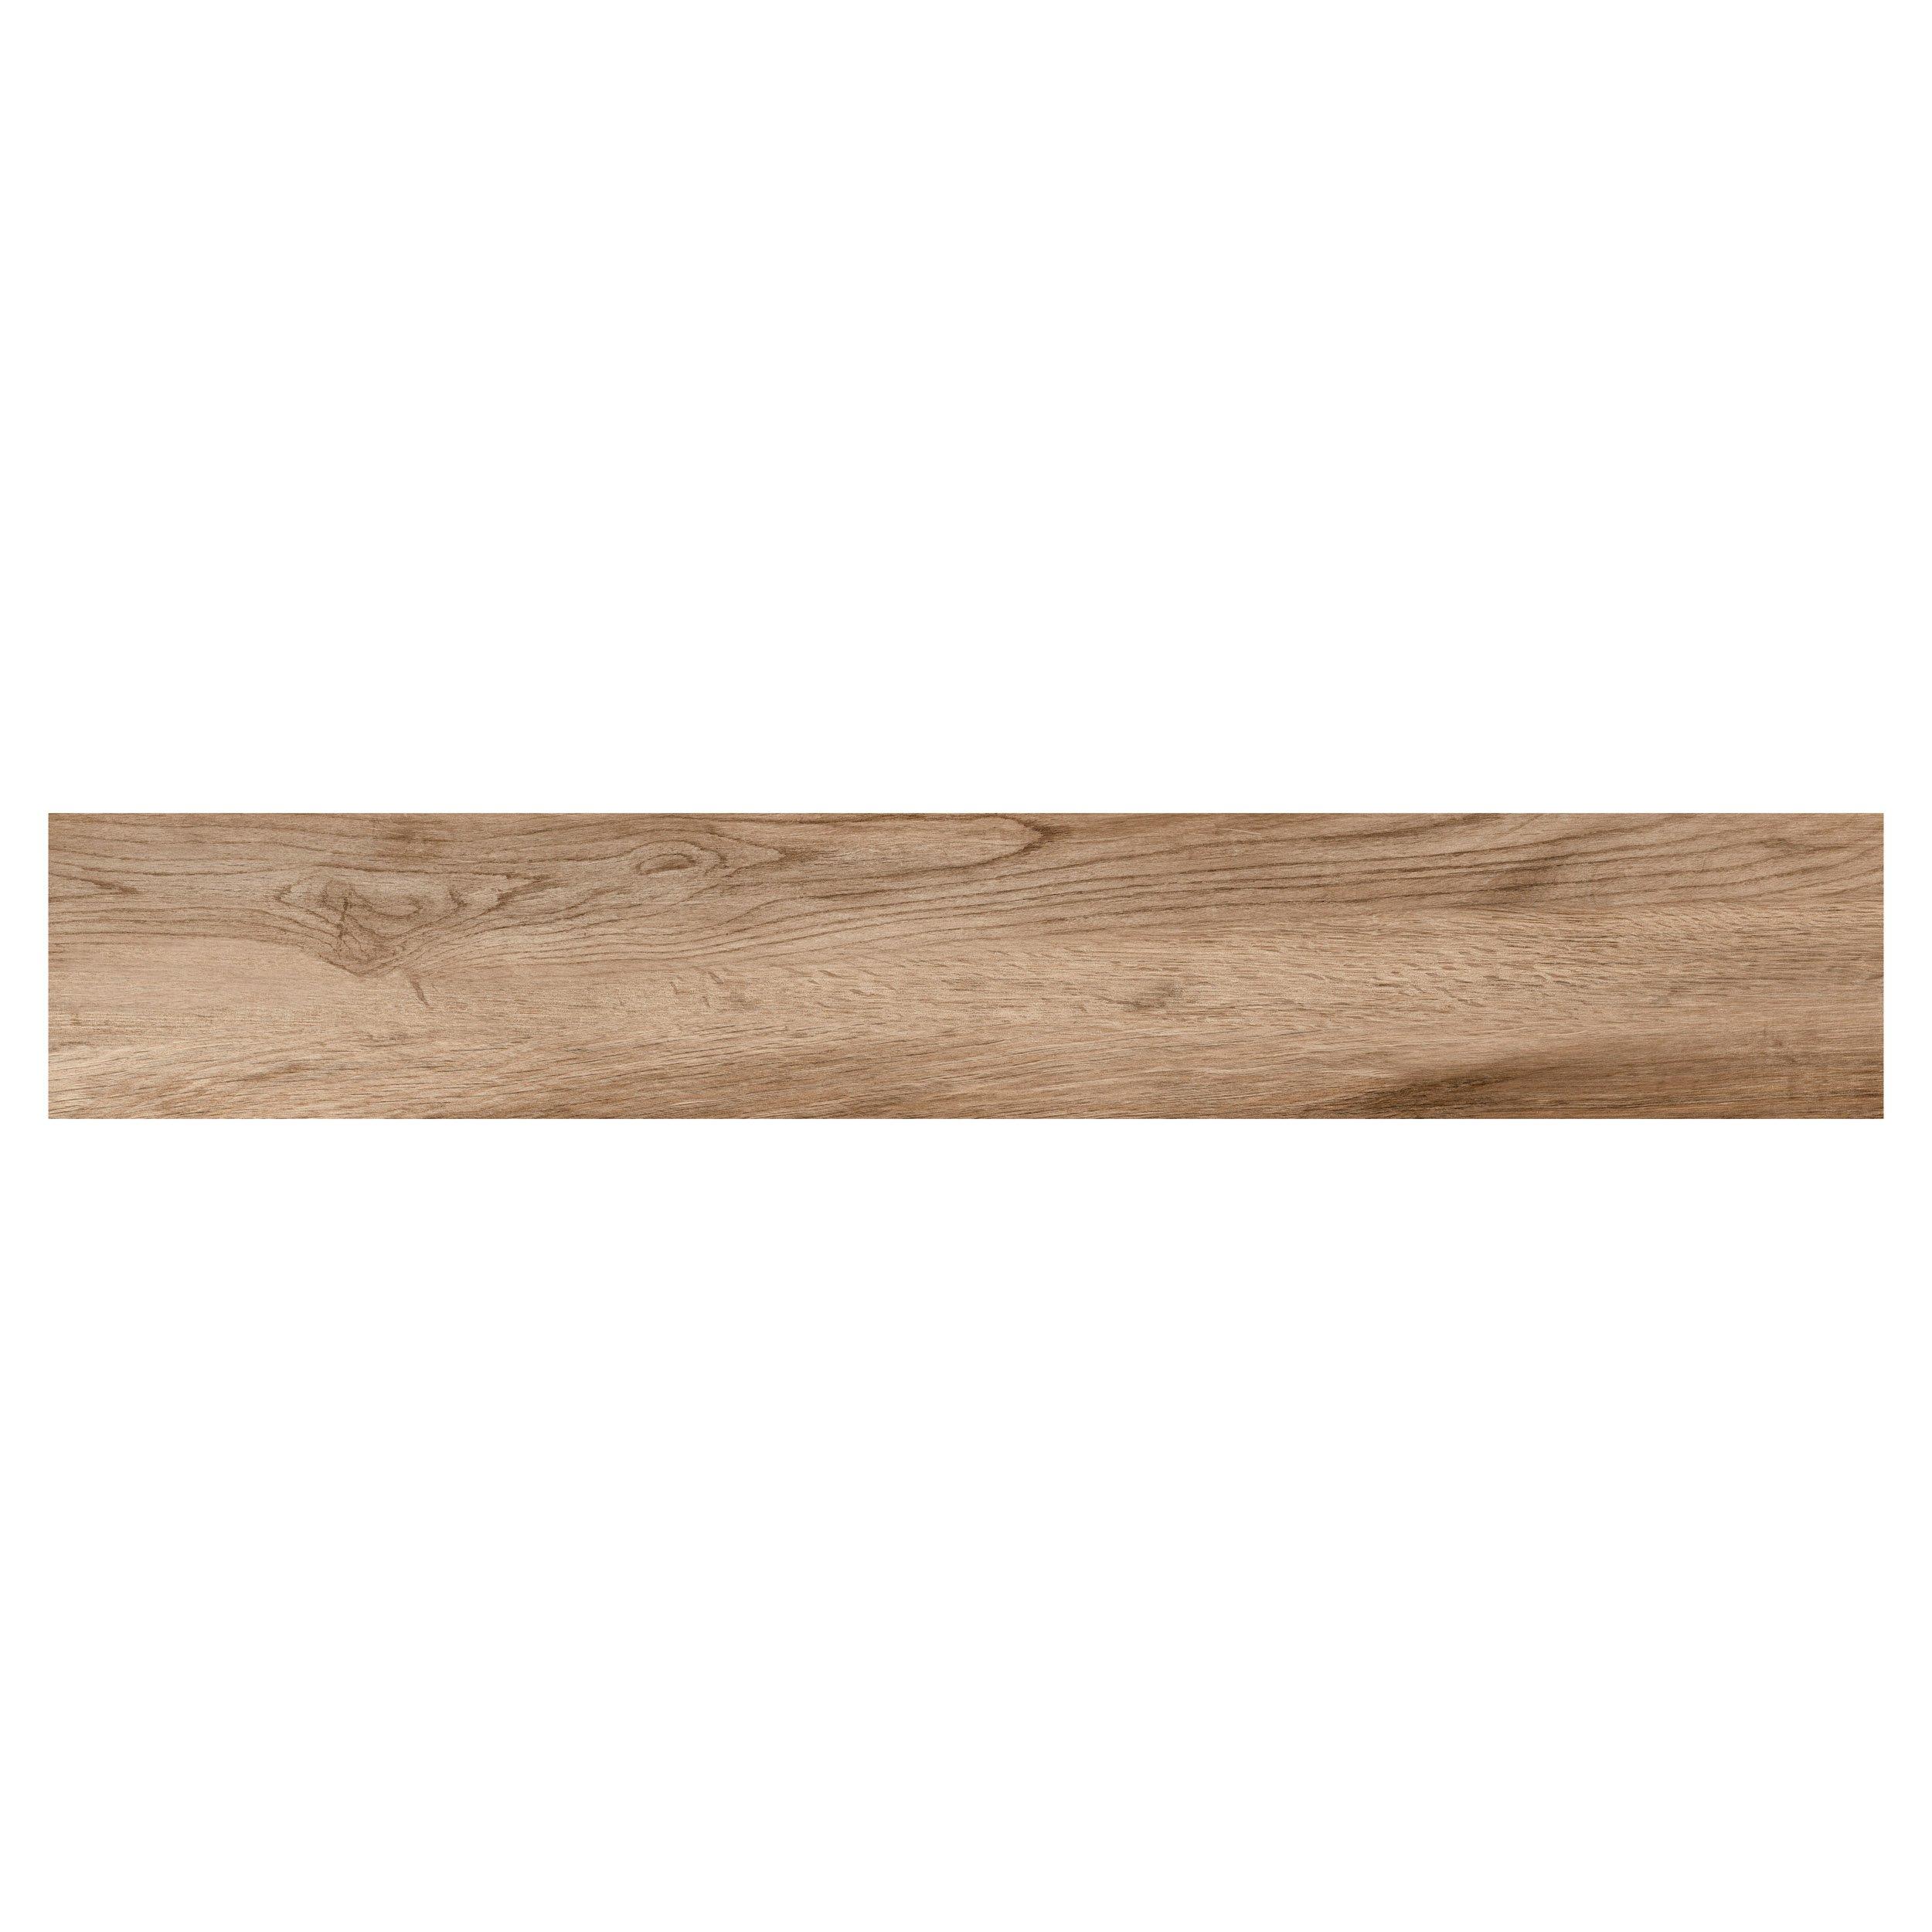 Chesterfield Brown II Wood Plank Ceramic Tile